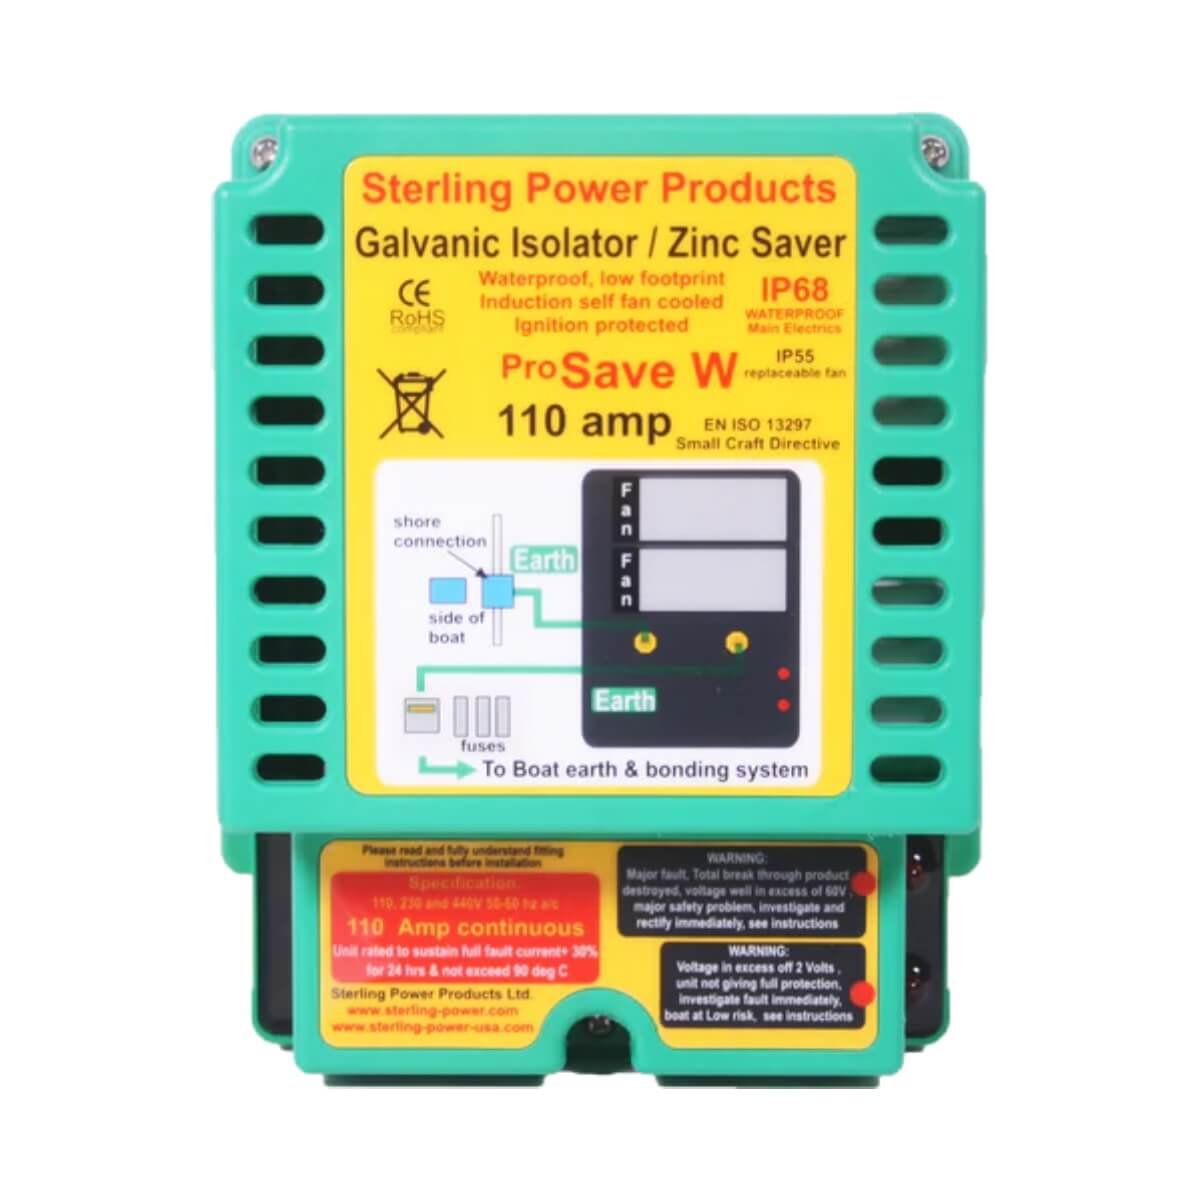 Sterling Galvanic Isolator 130A - Zinc Saver - Pro Save W (Waterproof)